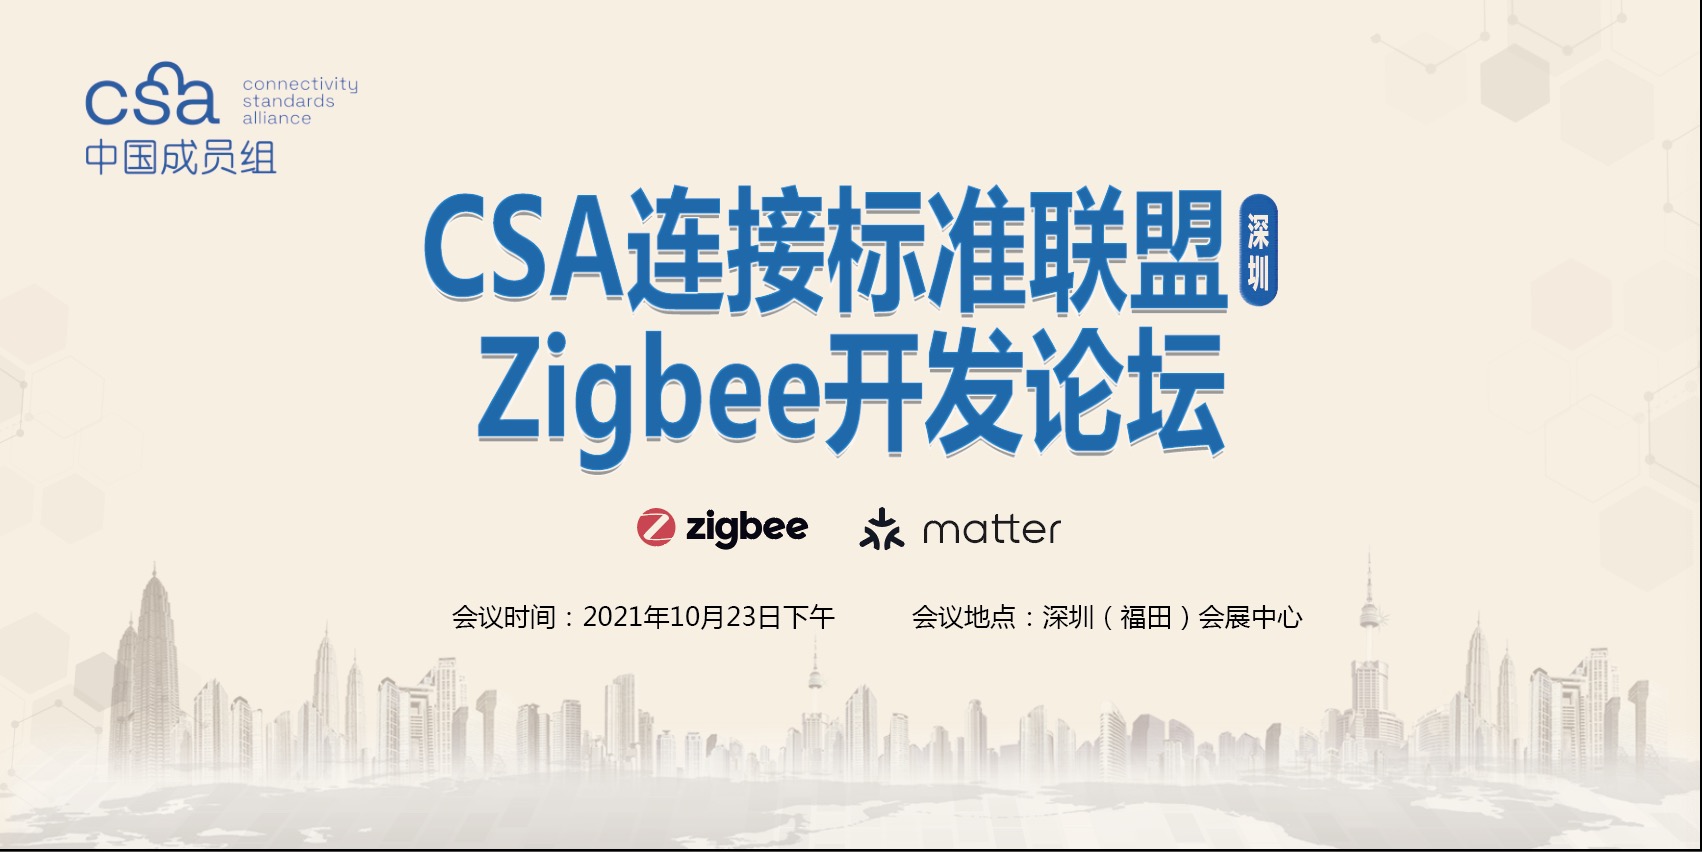 CSA连接标准联盟Zigbee开发论坛